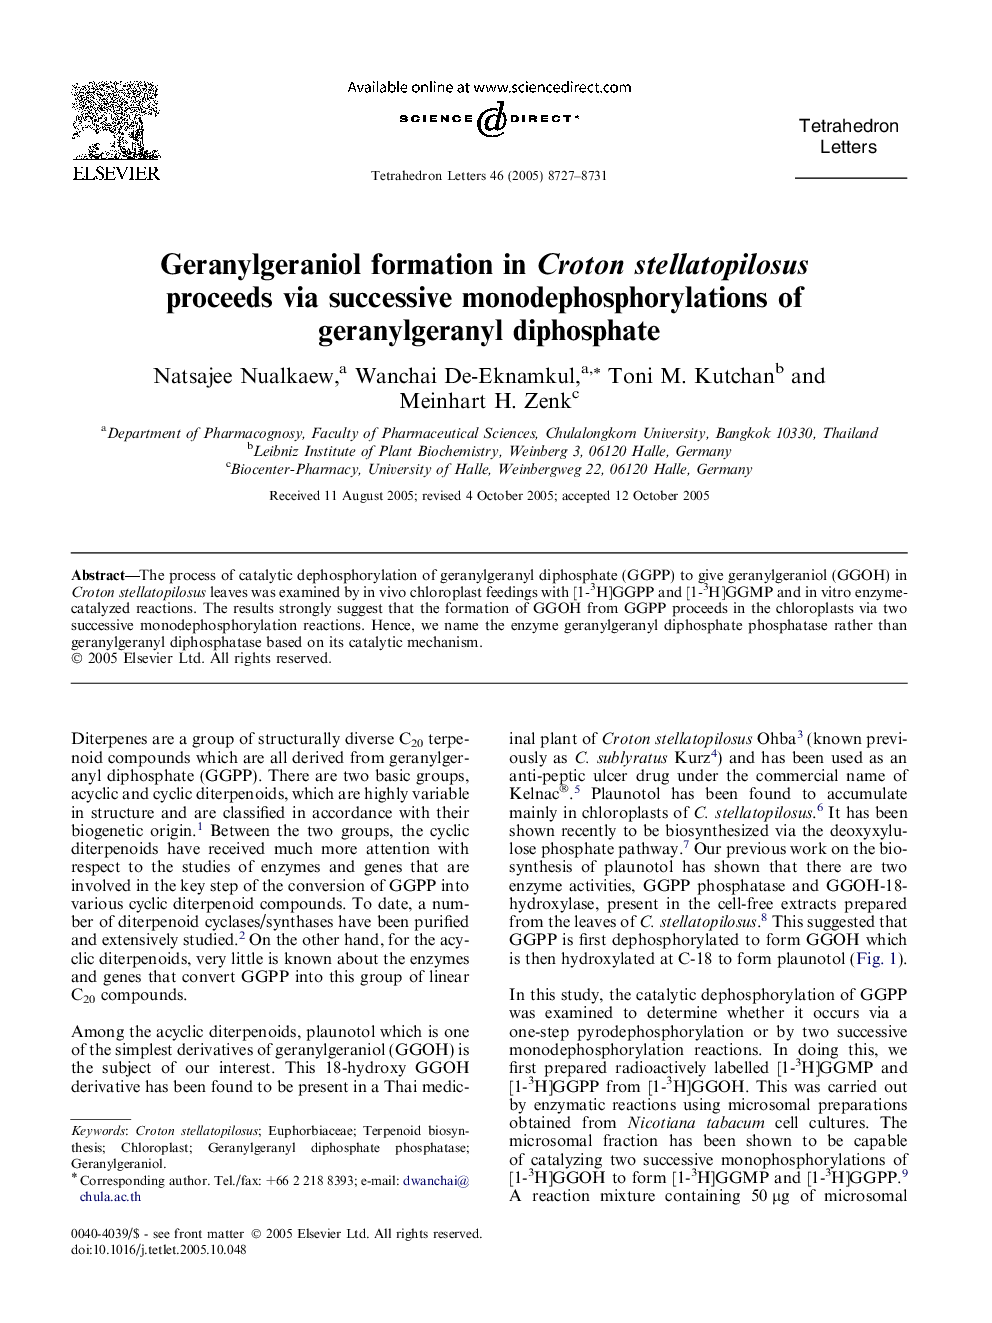 Geranylgeraniol formation in Croton stellatopilosus proceeds via successive monodephosphorylations of geranylgeranyl diphosphate